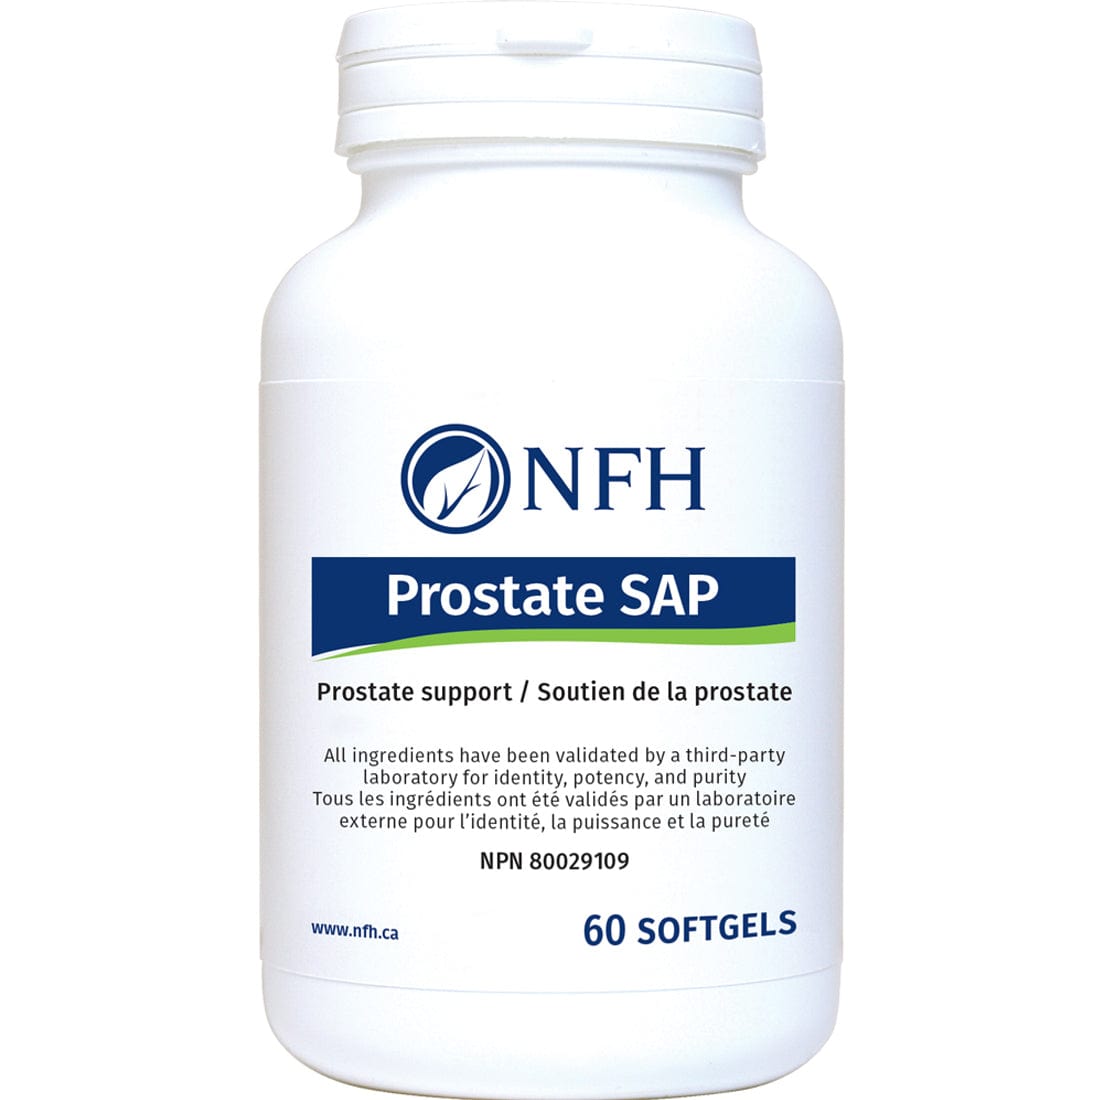 NFH Prostate SAP, 60 Softgels